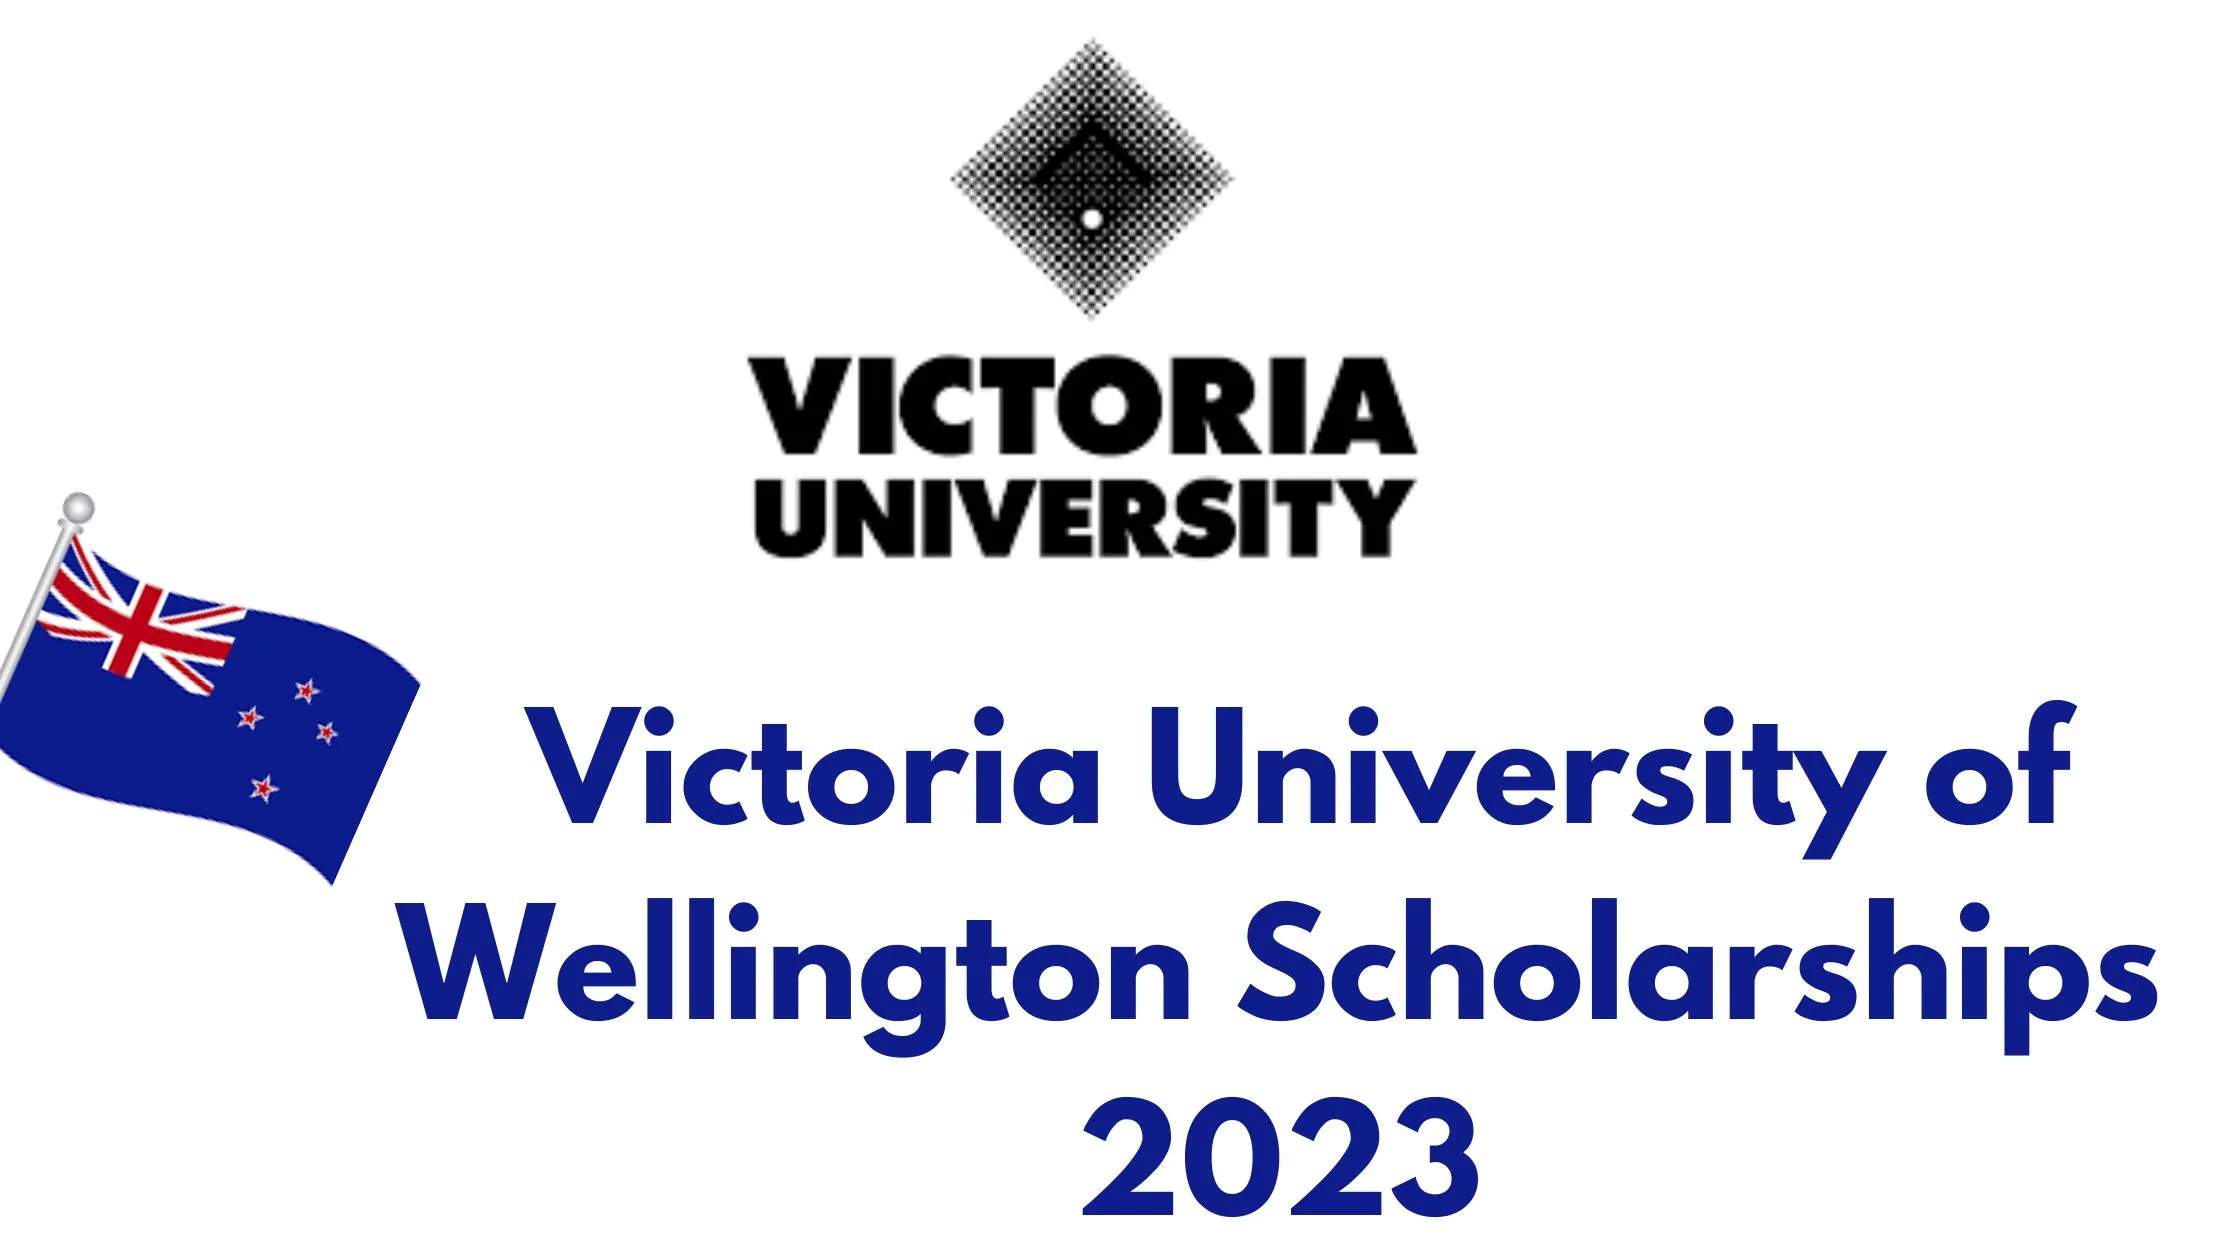 Victoria University of Wellington Scholarships 2023